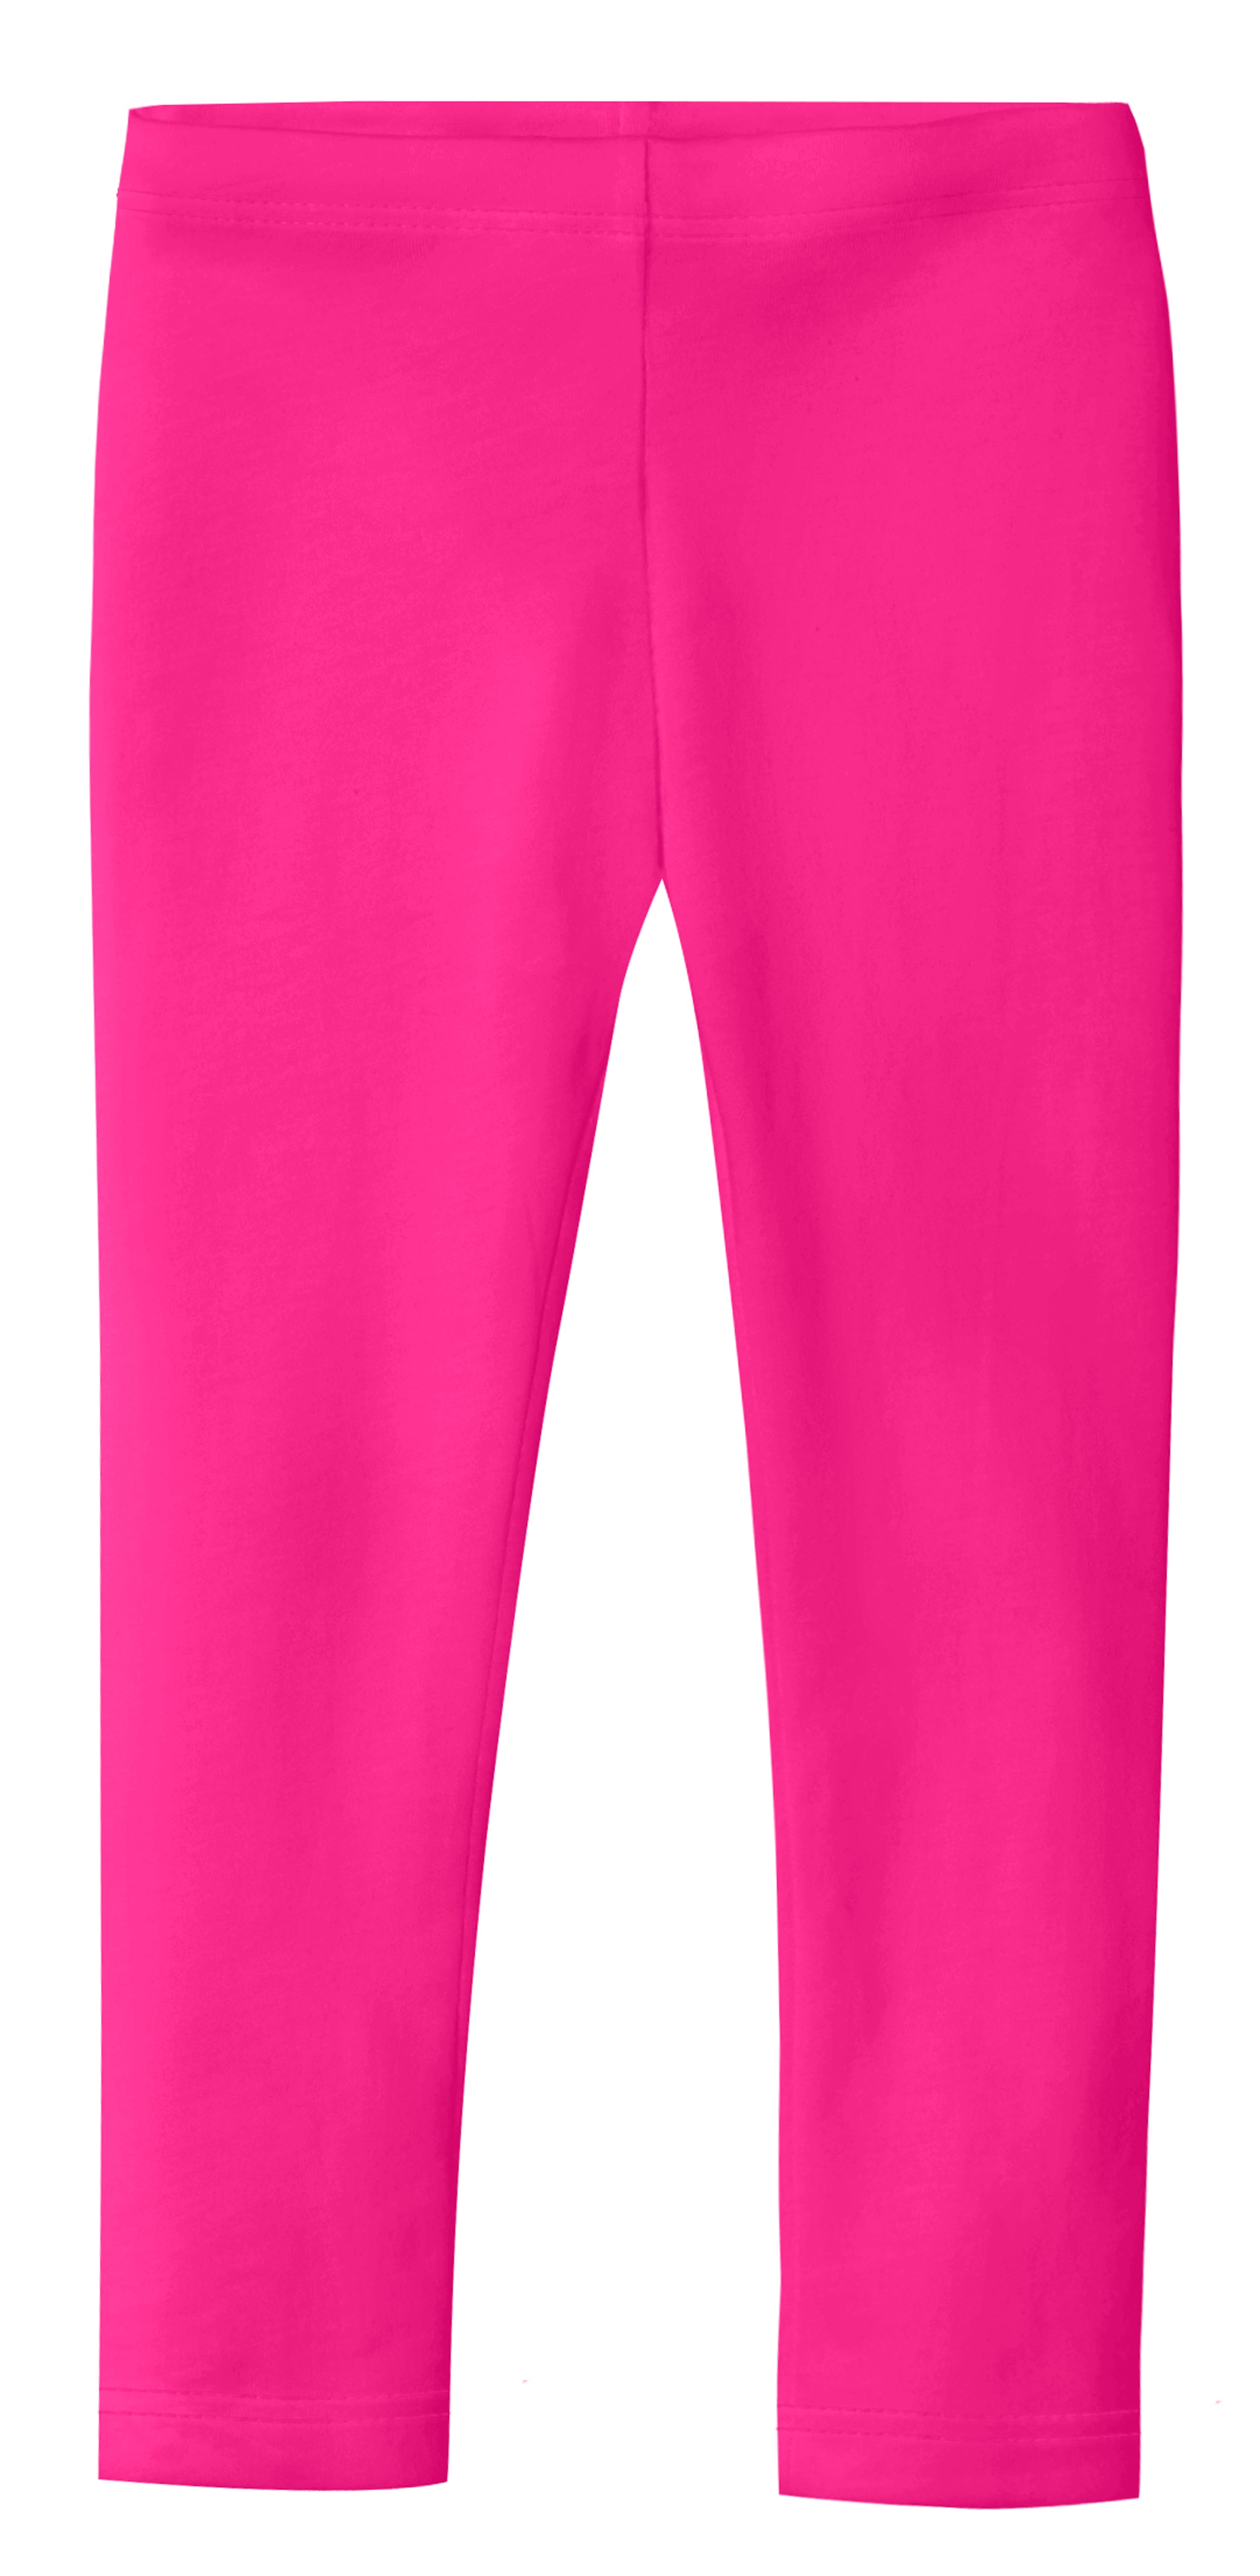 Girls Soft Organic Cotton Leggings  Bright Light Pink - City Threads USA